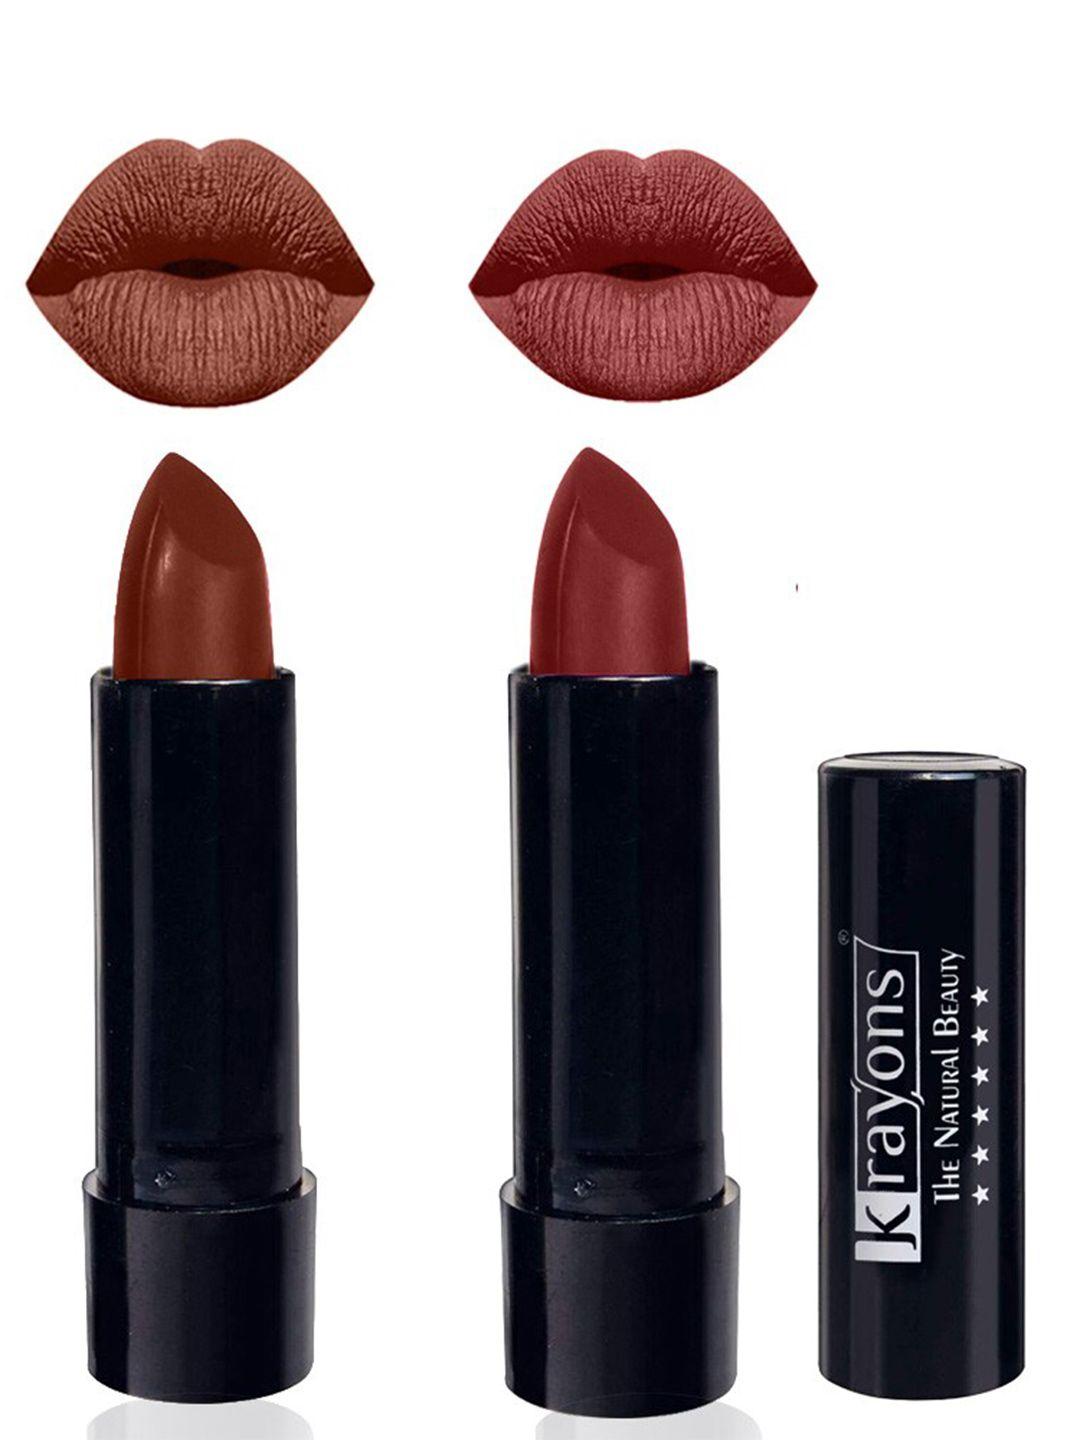 krayons the natural beauty set of 2 matte lipstick - chocolate mocha167 & cherry maroon195